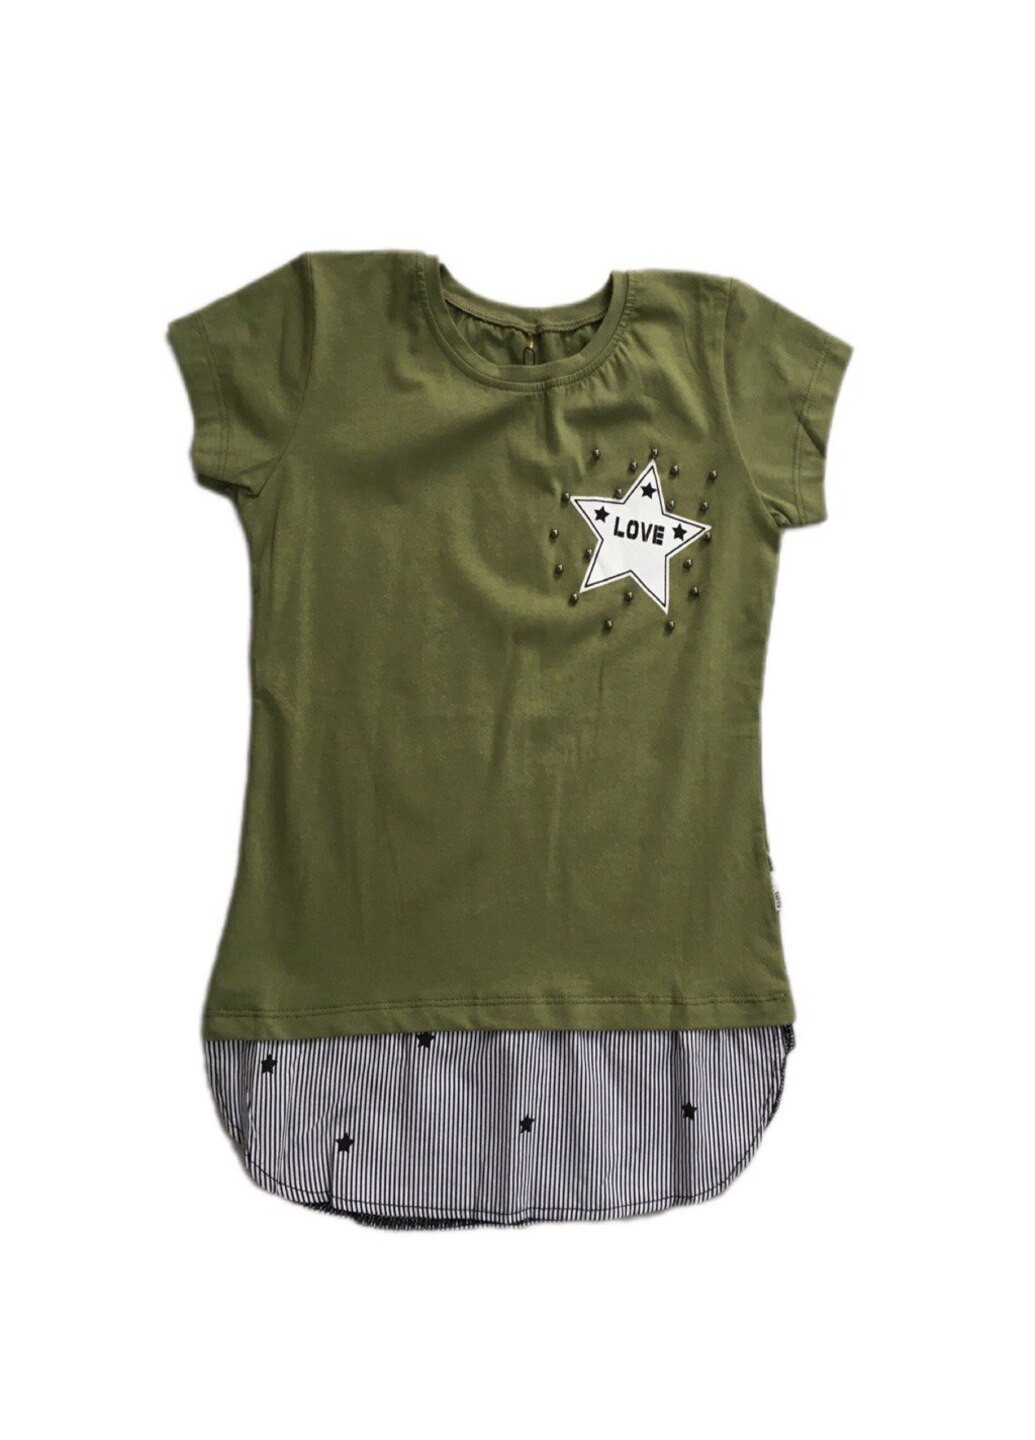 Оливковая (хаки) футболка-туника в цвете хаки для девочки. Tuffy